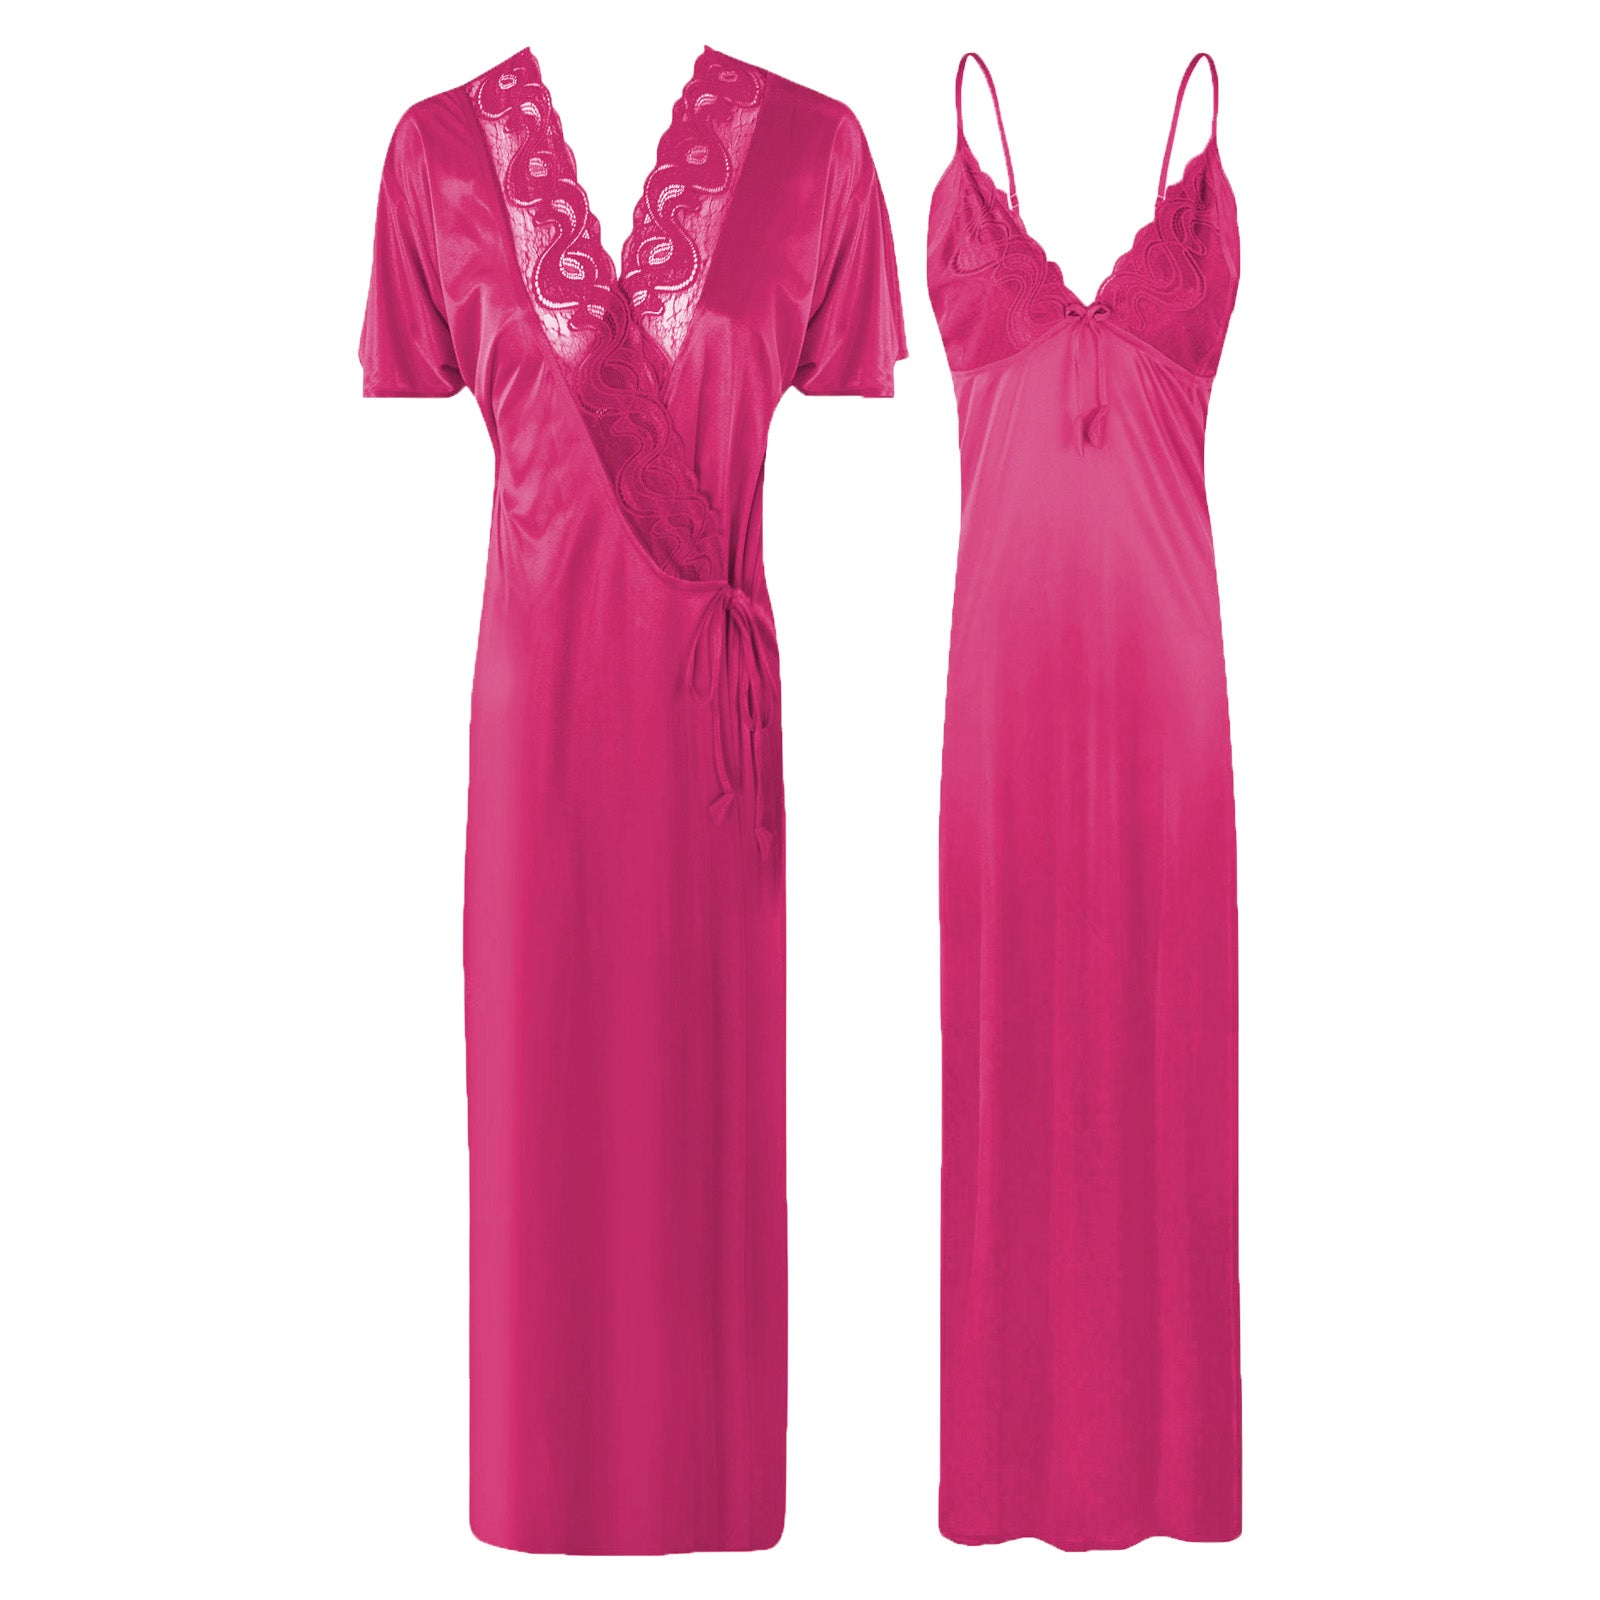 Fuchsia / One Size New Ladies Satin Long Nightdress Women Nightwear Set Lace Detailed The Orange Tags